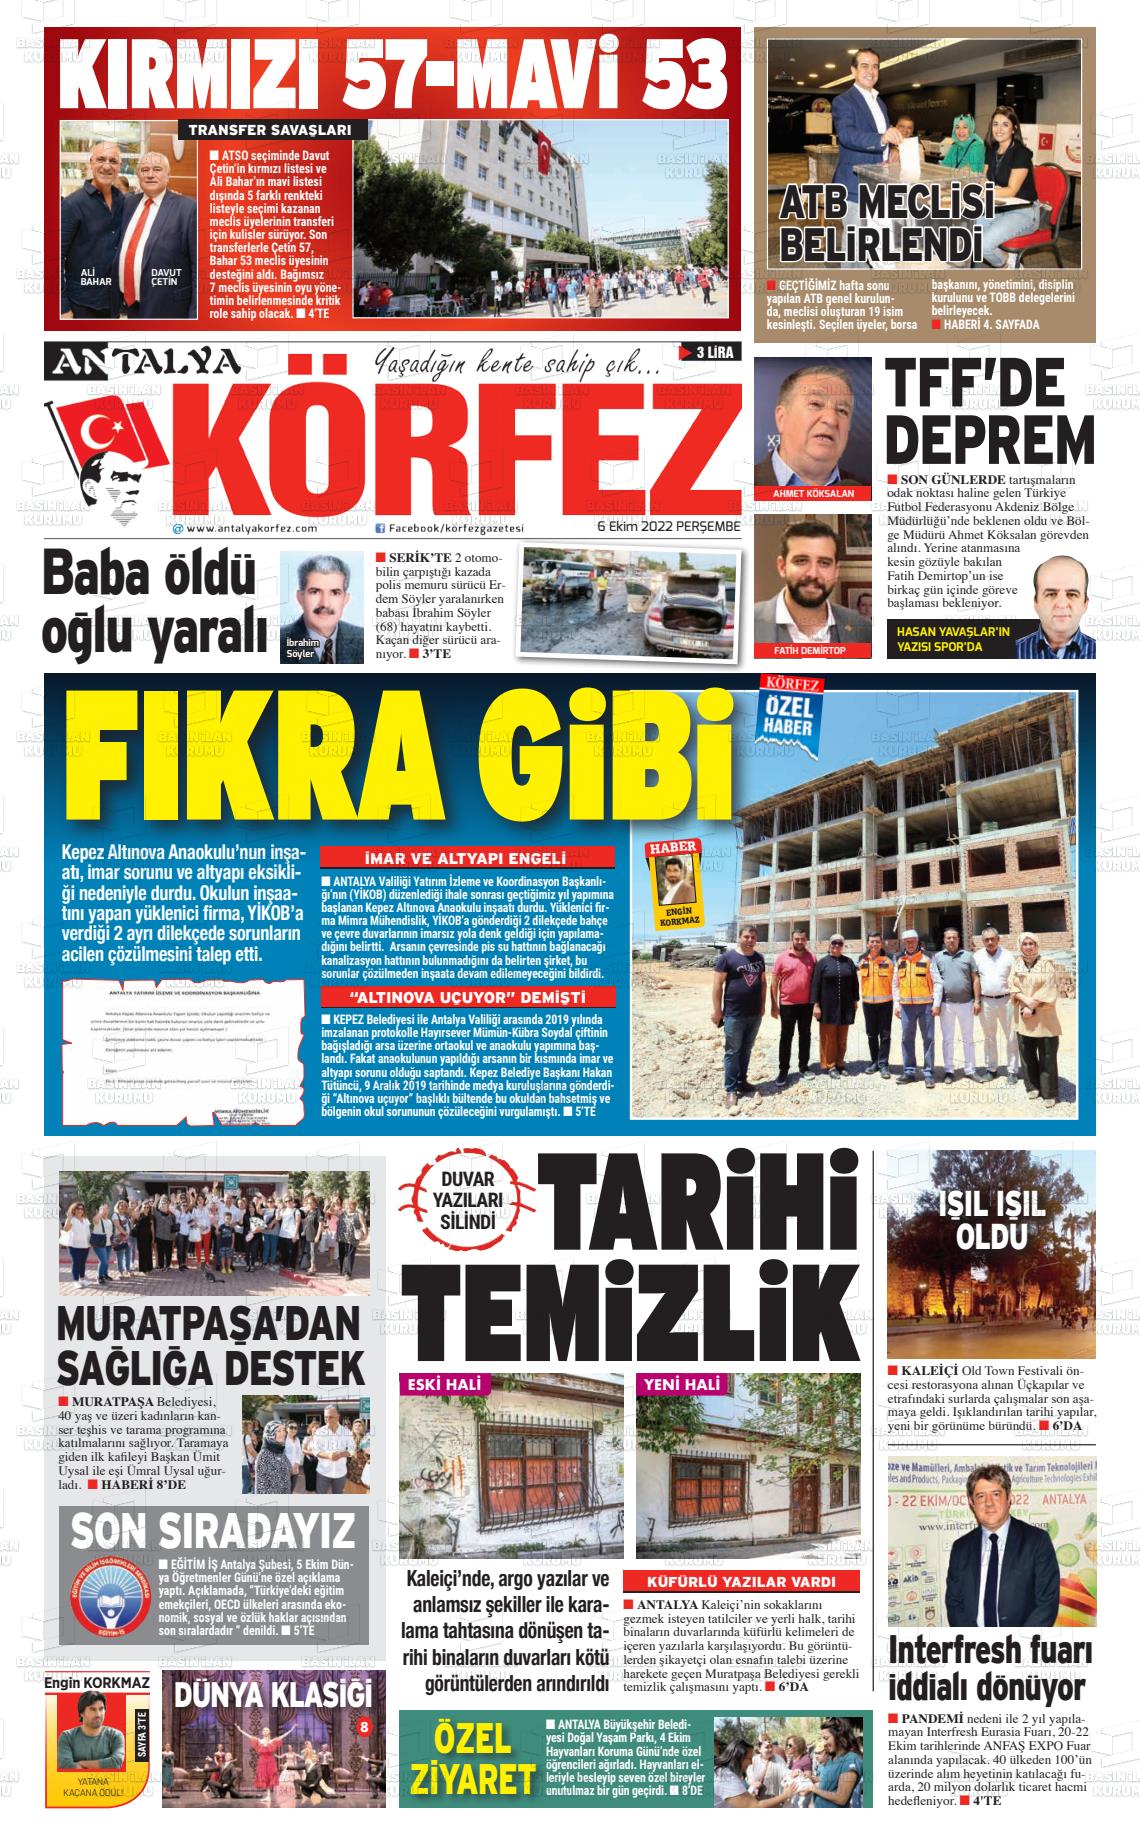 06 Ekim 2022 Antalya Körfez Gazete Manşeti